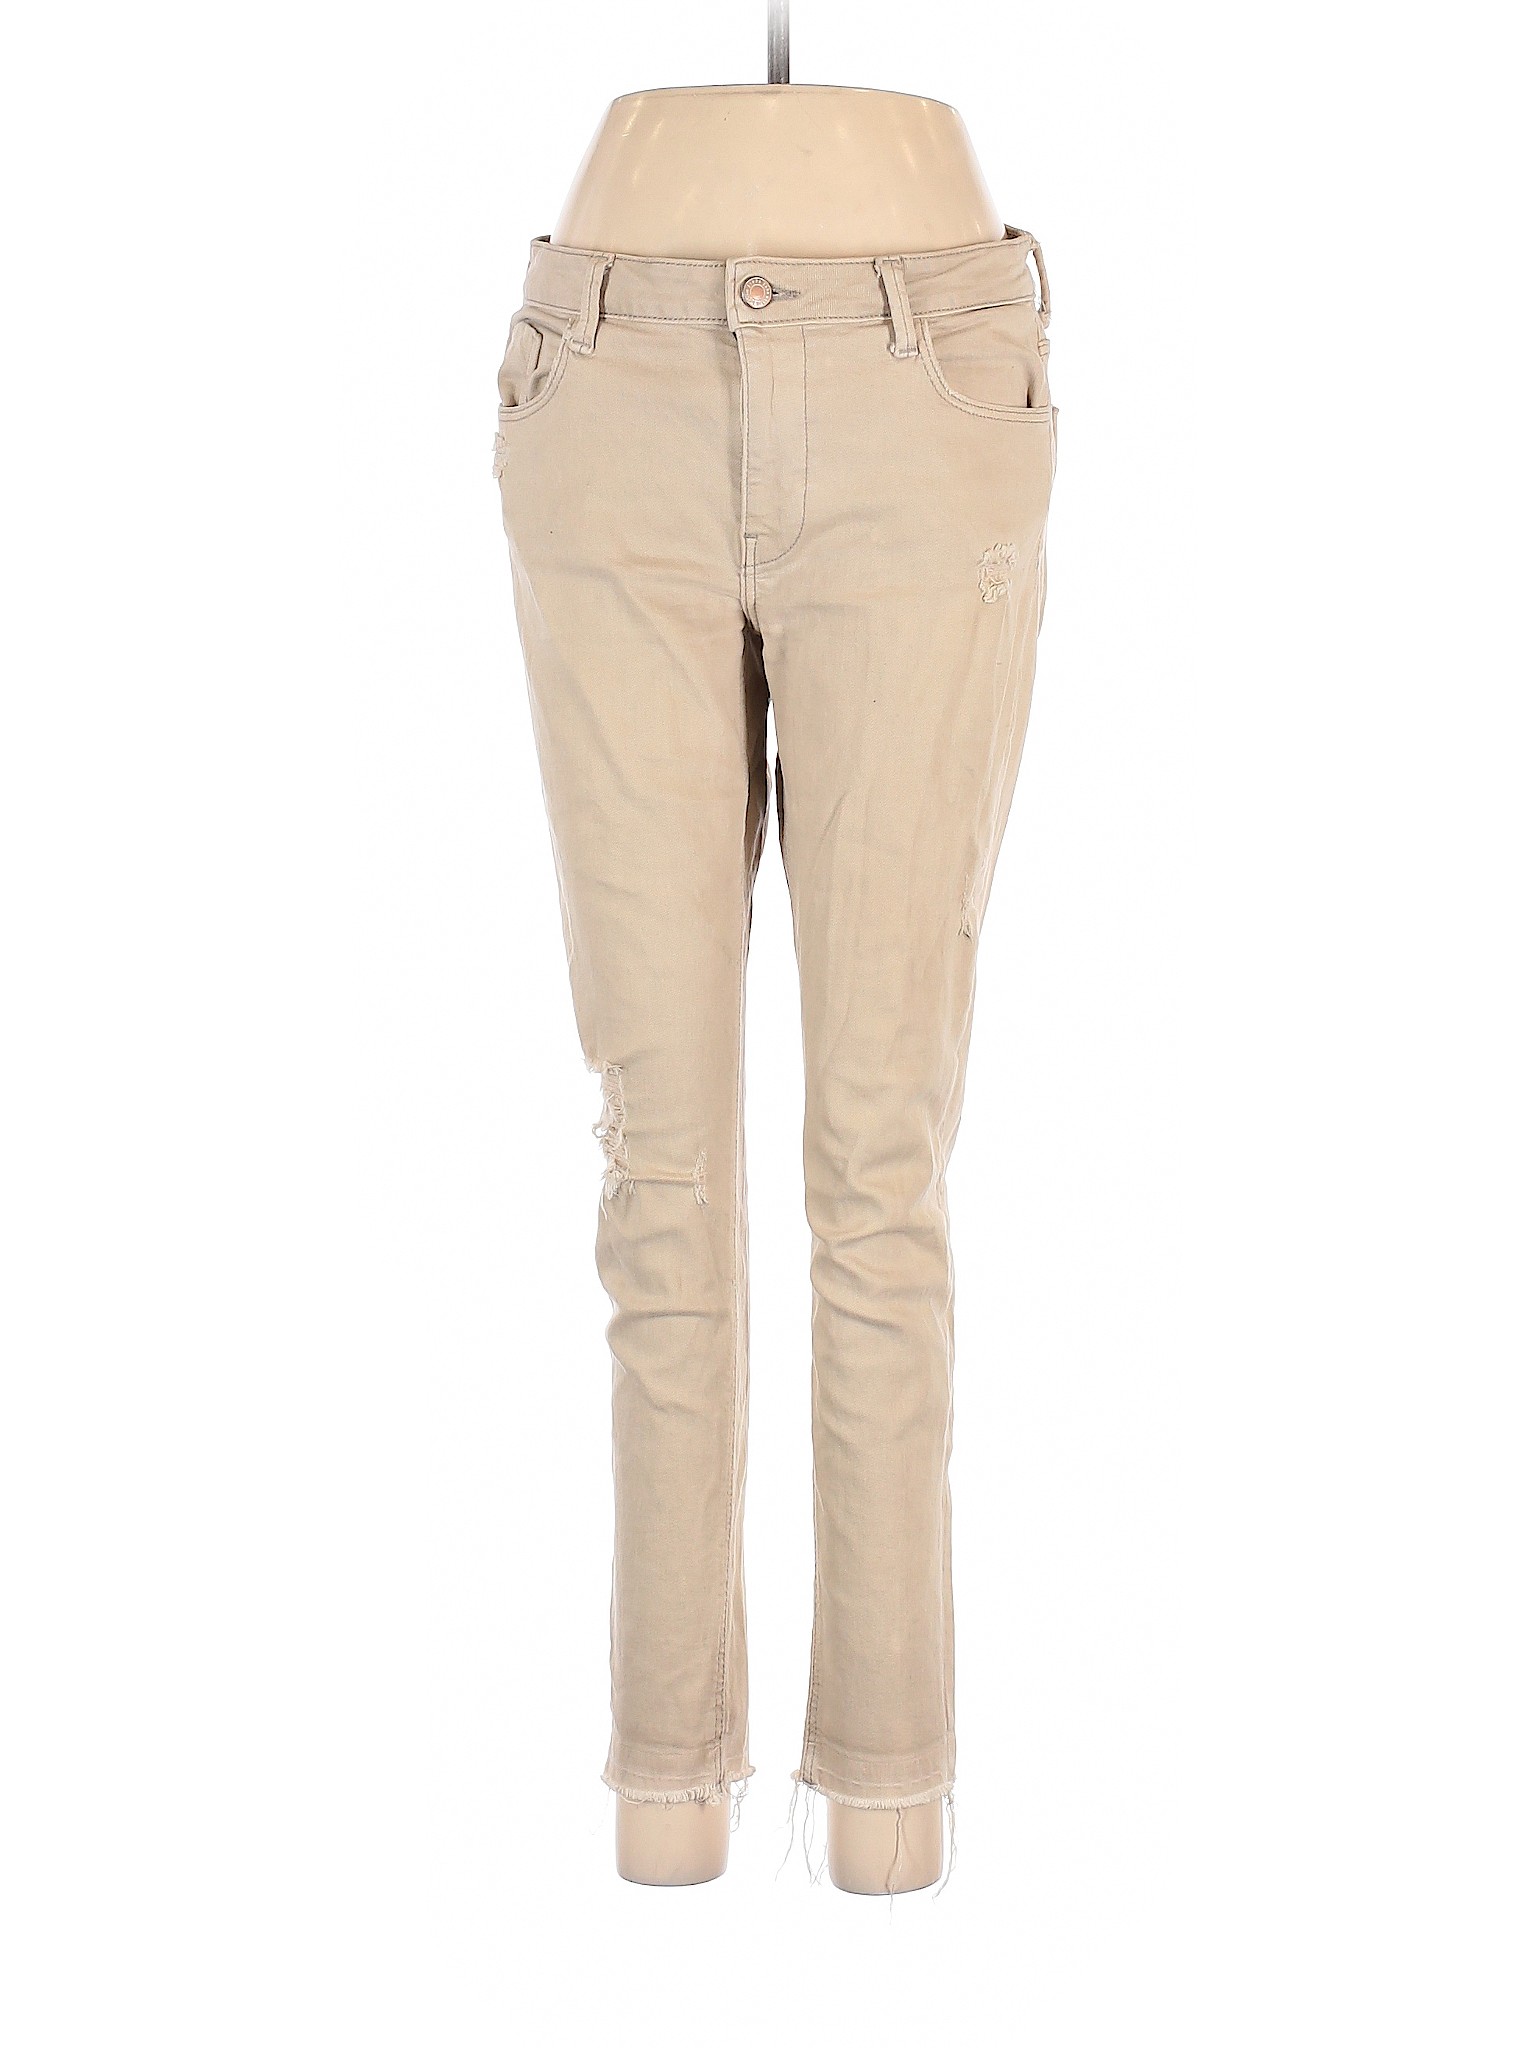 Zara Basic Women Brown Jeans 6 | eBay